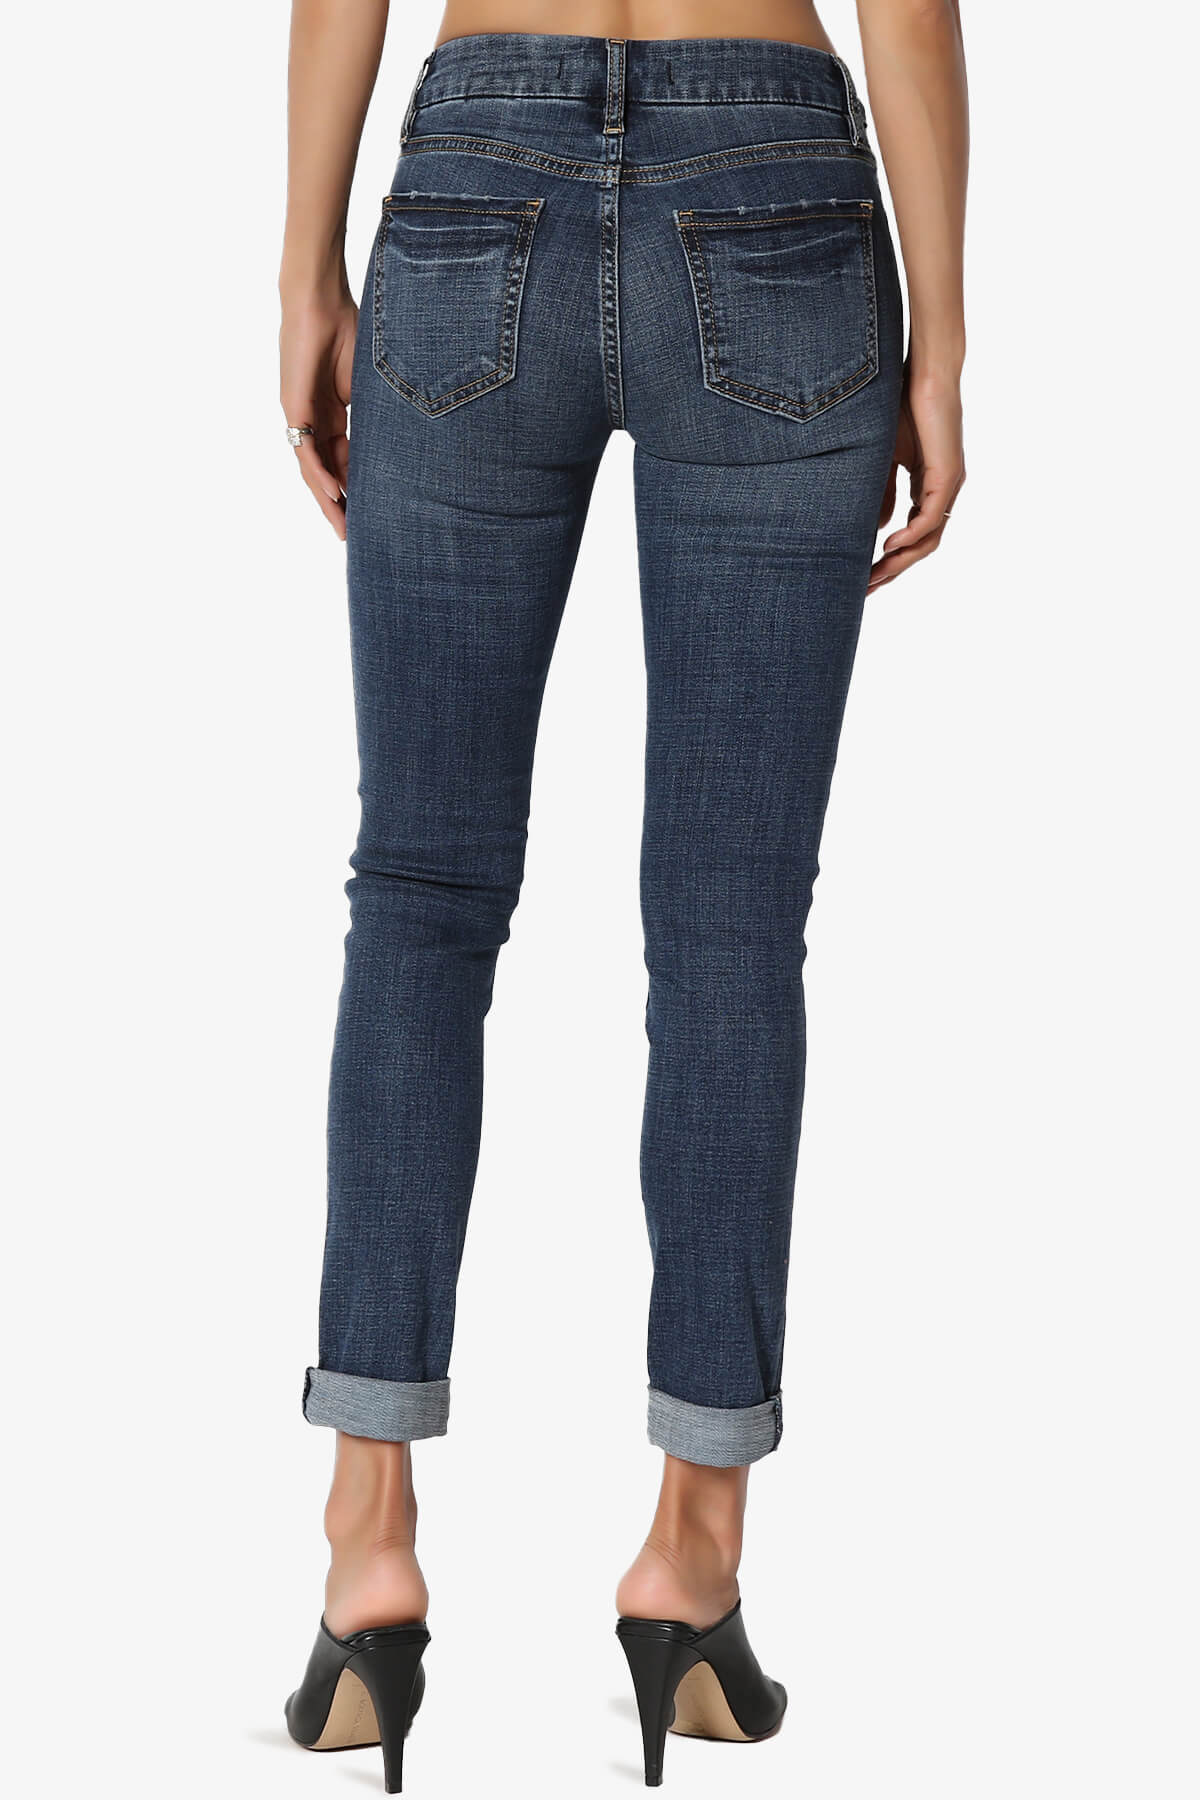 TheMogan Women's 0~3X Roll Up Mid Rise Dark Vintage Wash Tencel Denim Skinny Jeans - image 2 of 7